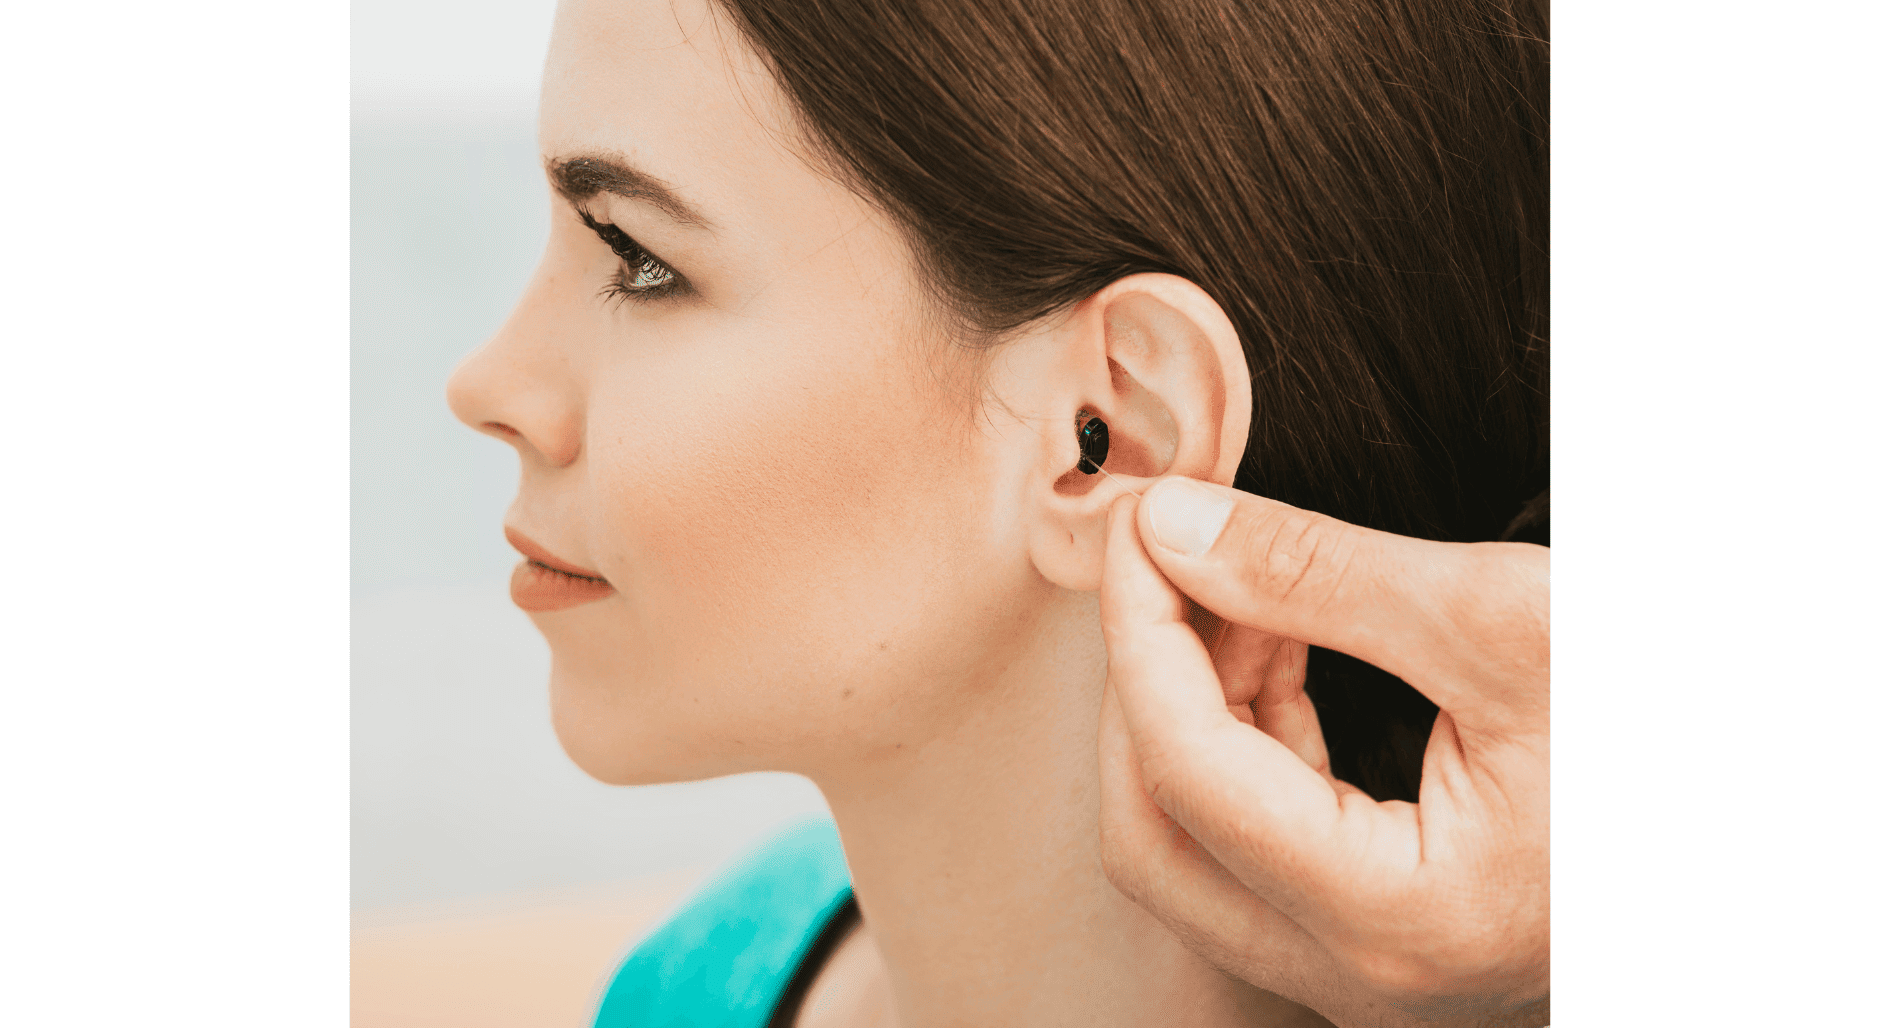 Breaking Stigmas Around Hearing Devices